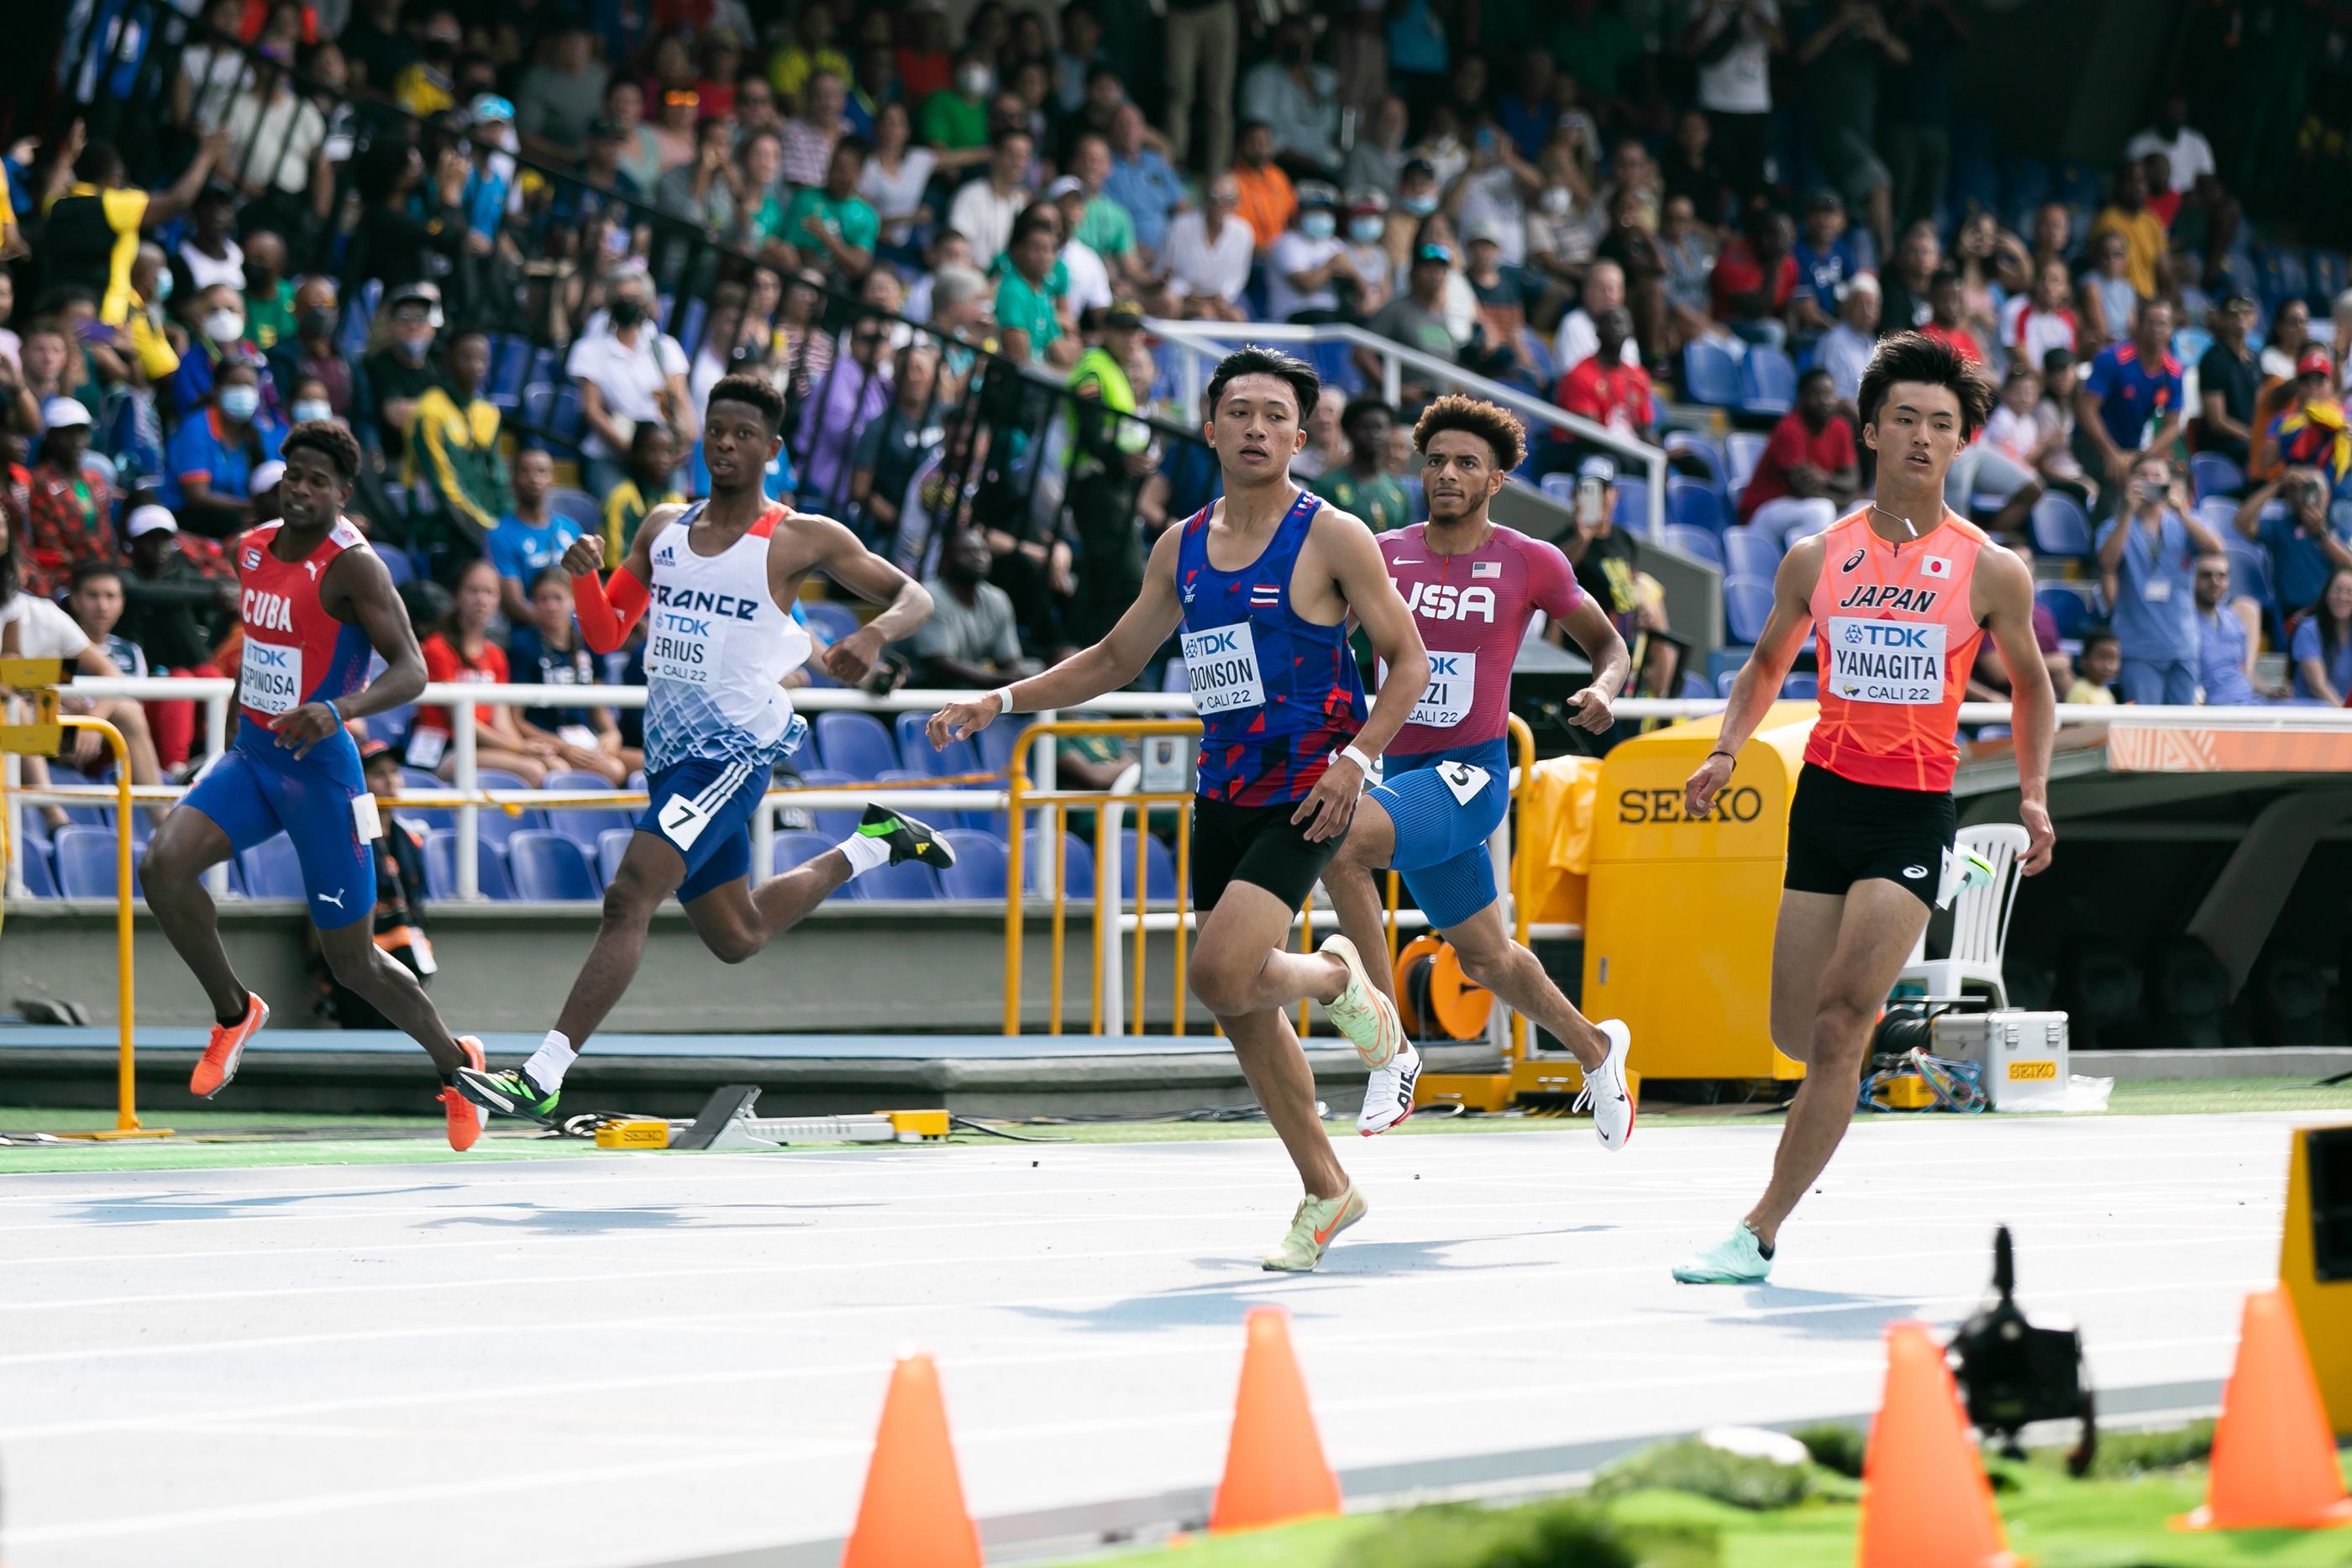 Puripol Boonson of Thailand and Japan's Hiroki Yanagita in the world U20 100m semifinals in Cali